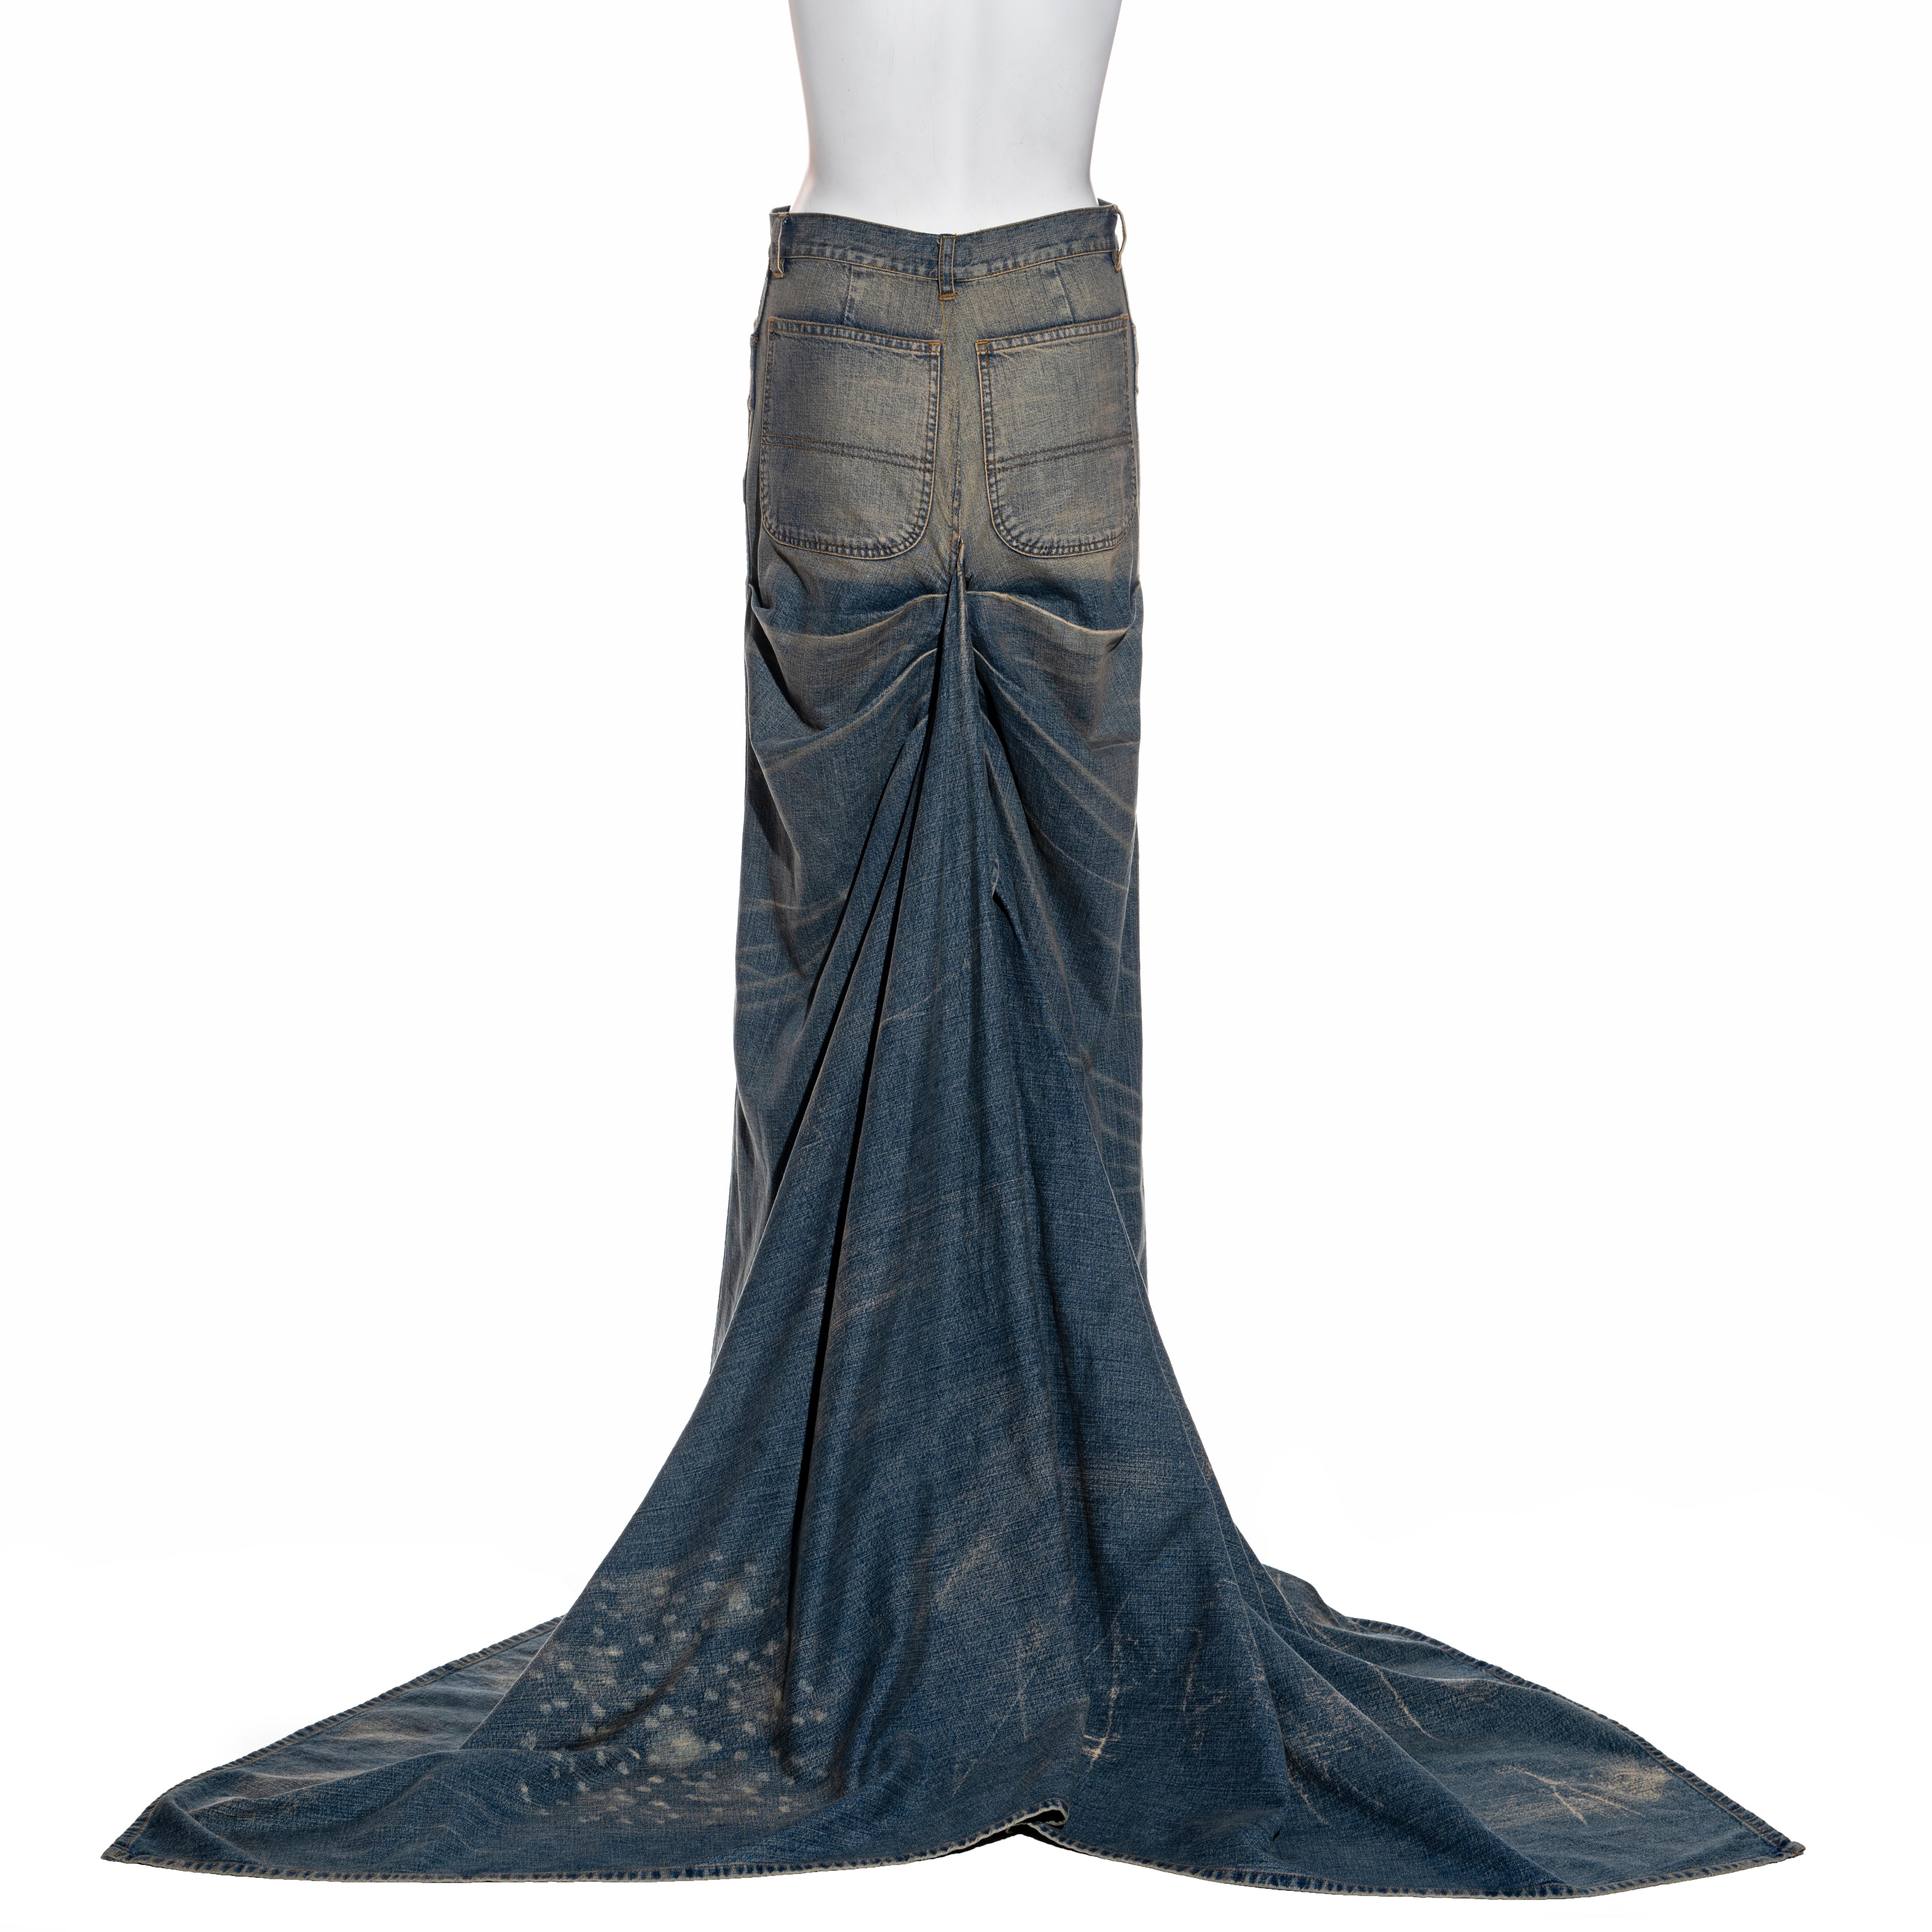 Ralph Lauren distressed denim floor-length bustle skirt with train, ss 2003 3